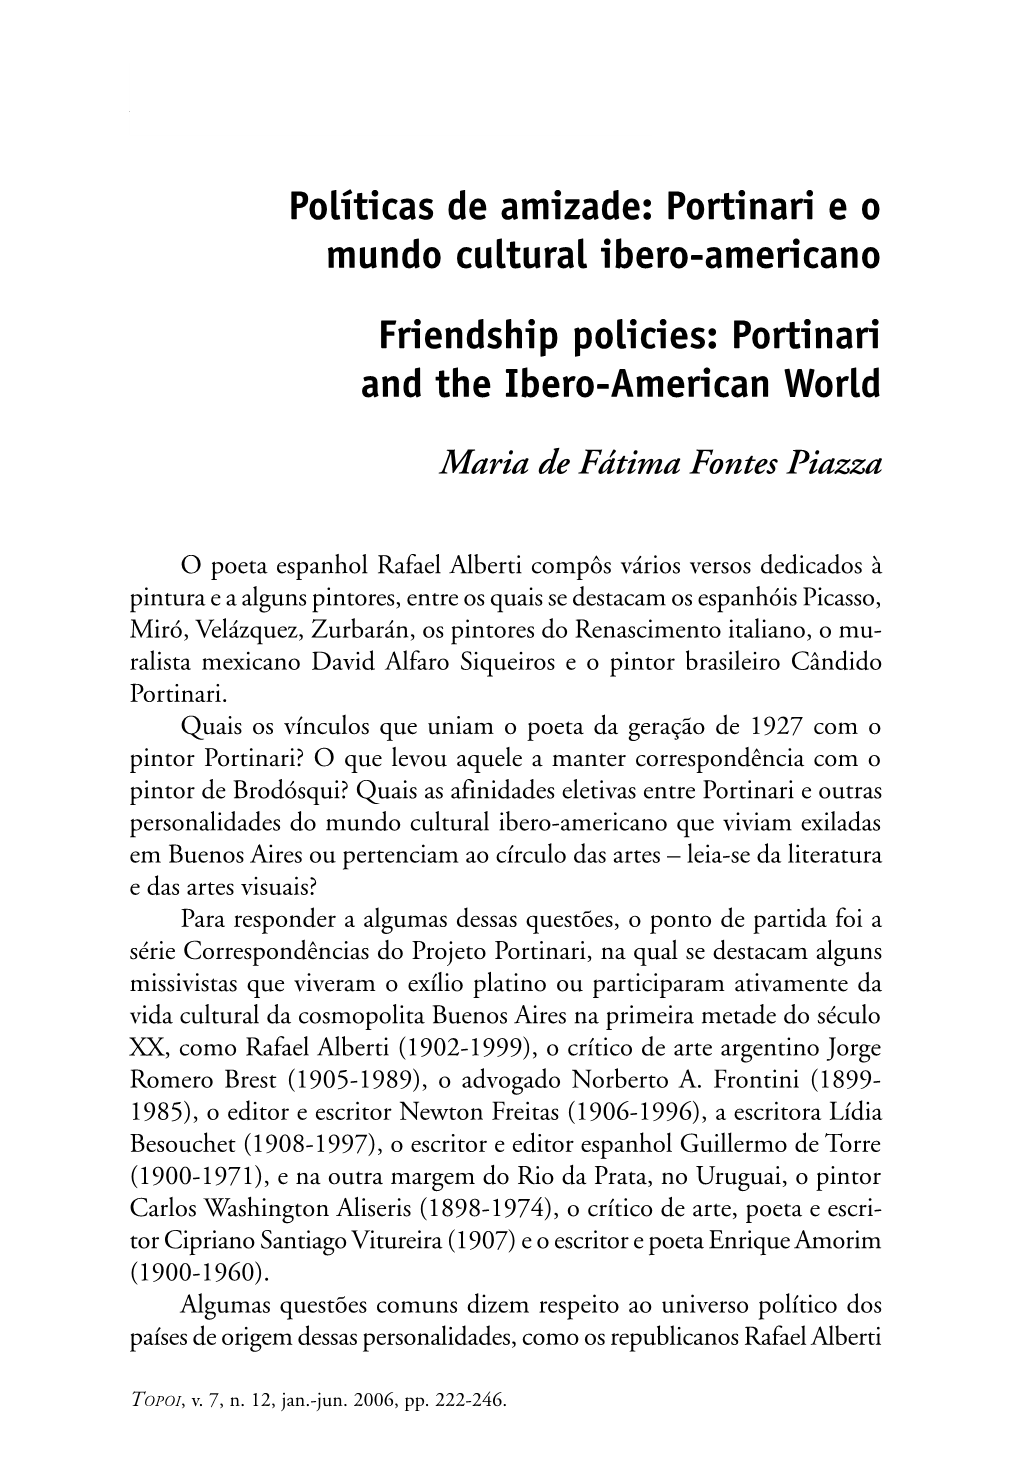 Políticas De Amizade: Portinari E O Mundo Cultural Ibero-Americano Friendship Policies: Portinari and the Ibero-American World